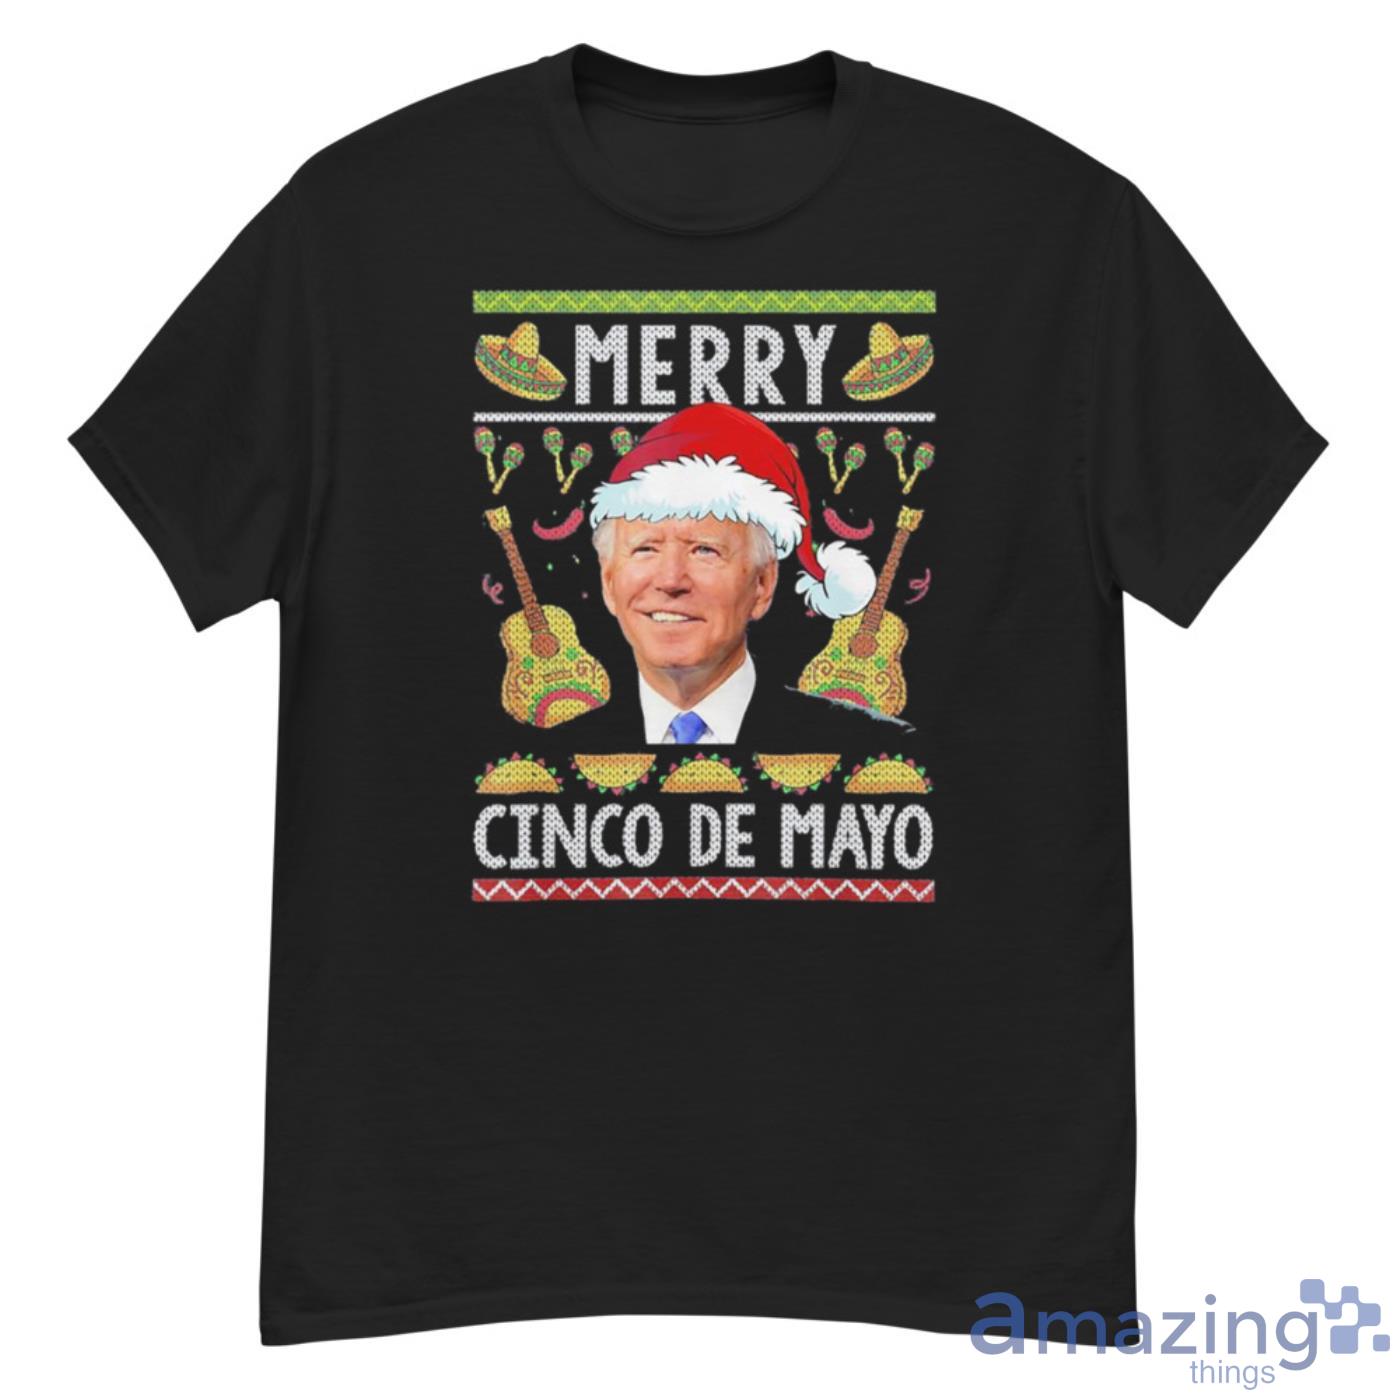 Joe Biden Mery Cinco De Mayo Merry Christmas Funny Shirt Product Photo 1